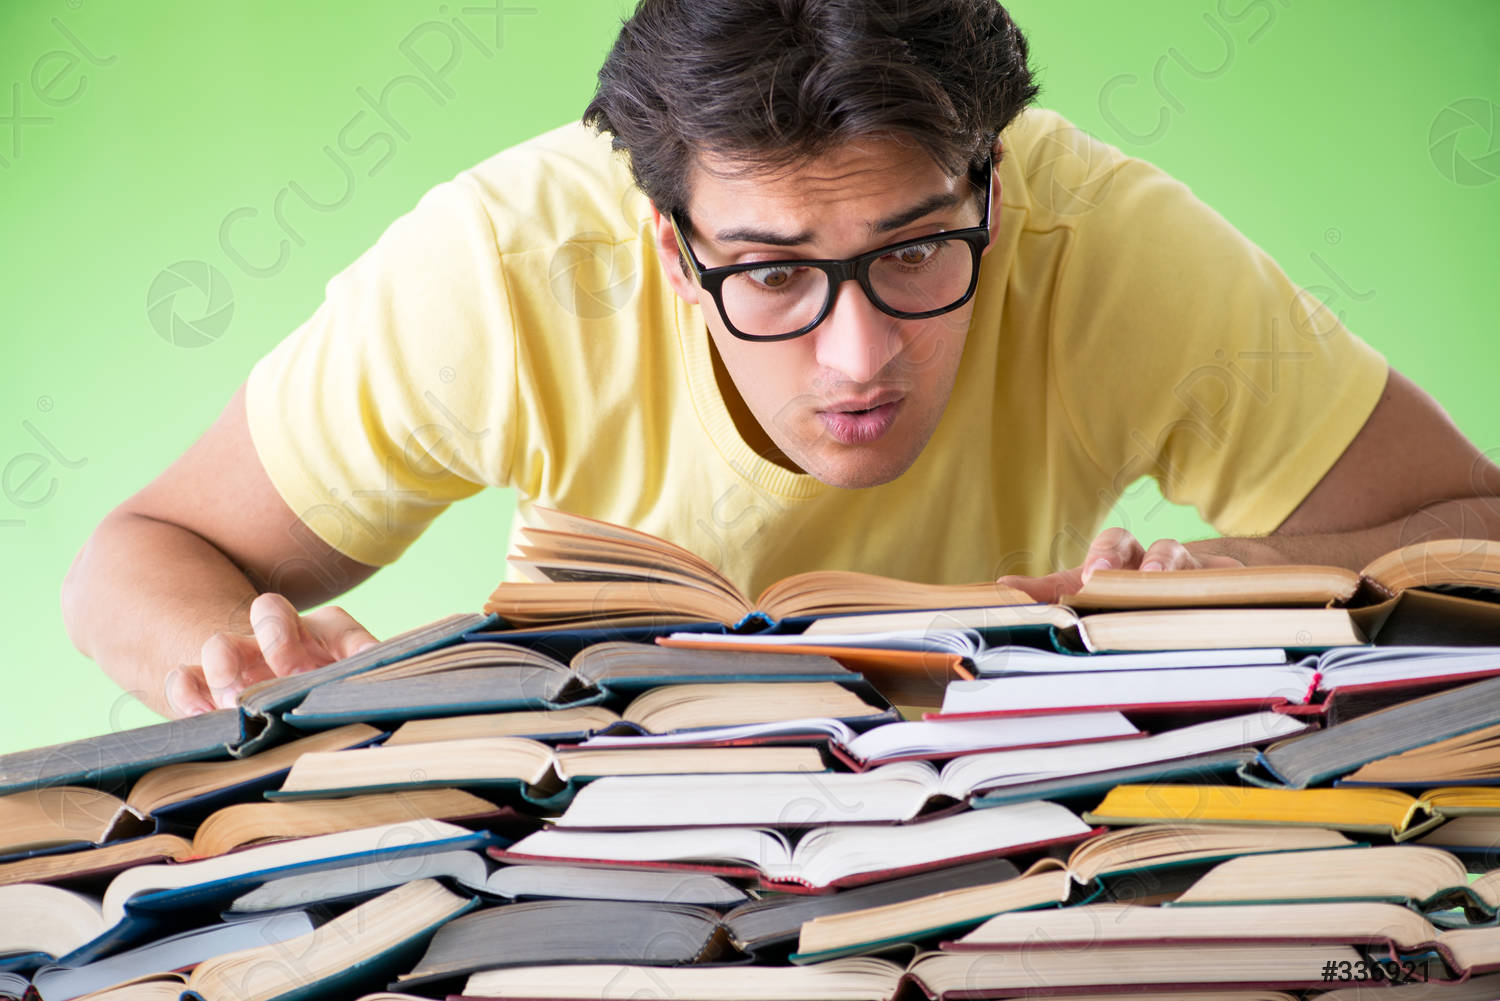 If he passed his exams he. Трудолюбие студенты. Too many books. Exam background.